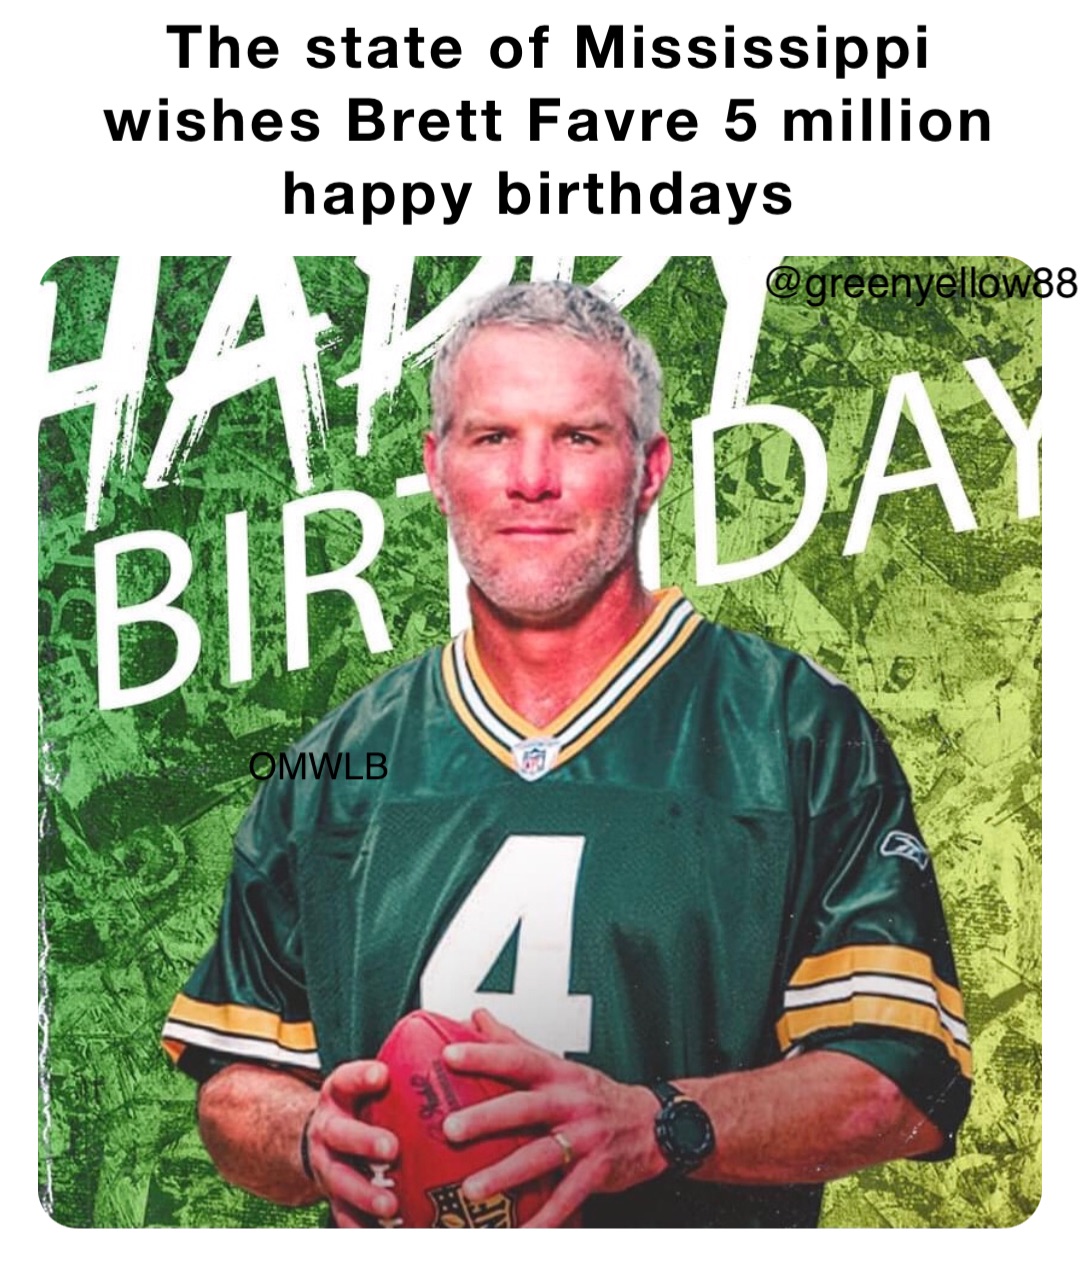 The state of Mississippi wishes Brett Favre 5 million happy birthdays